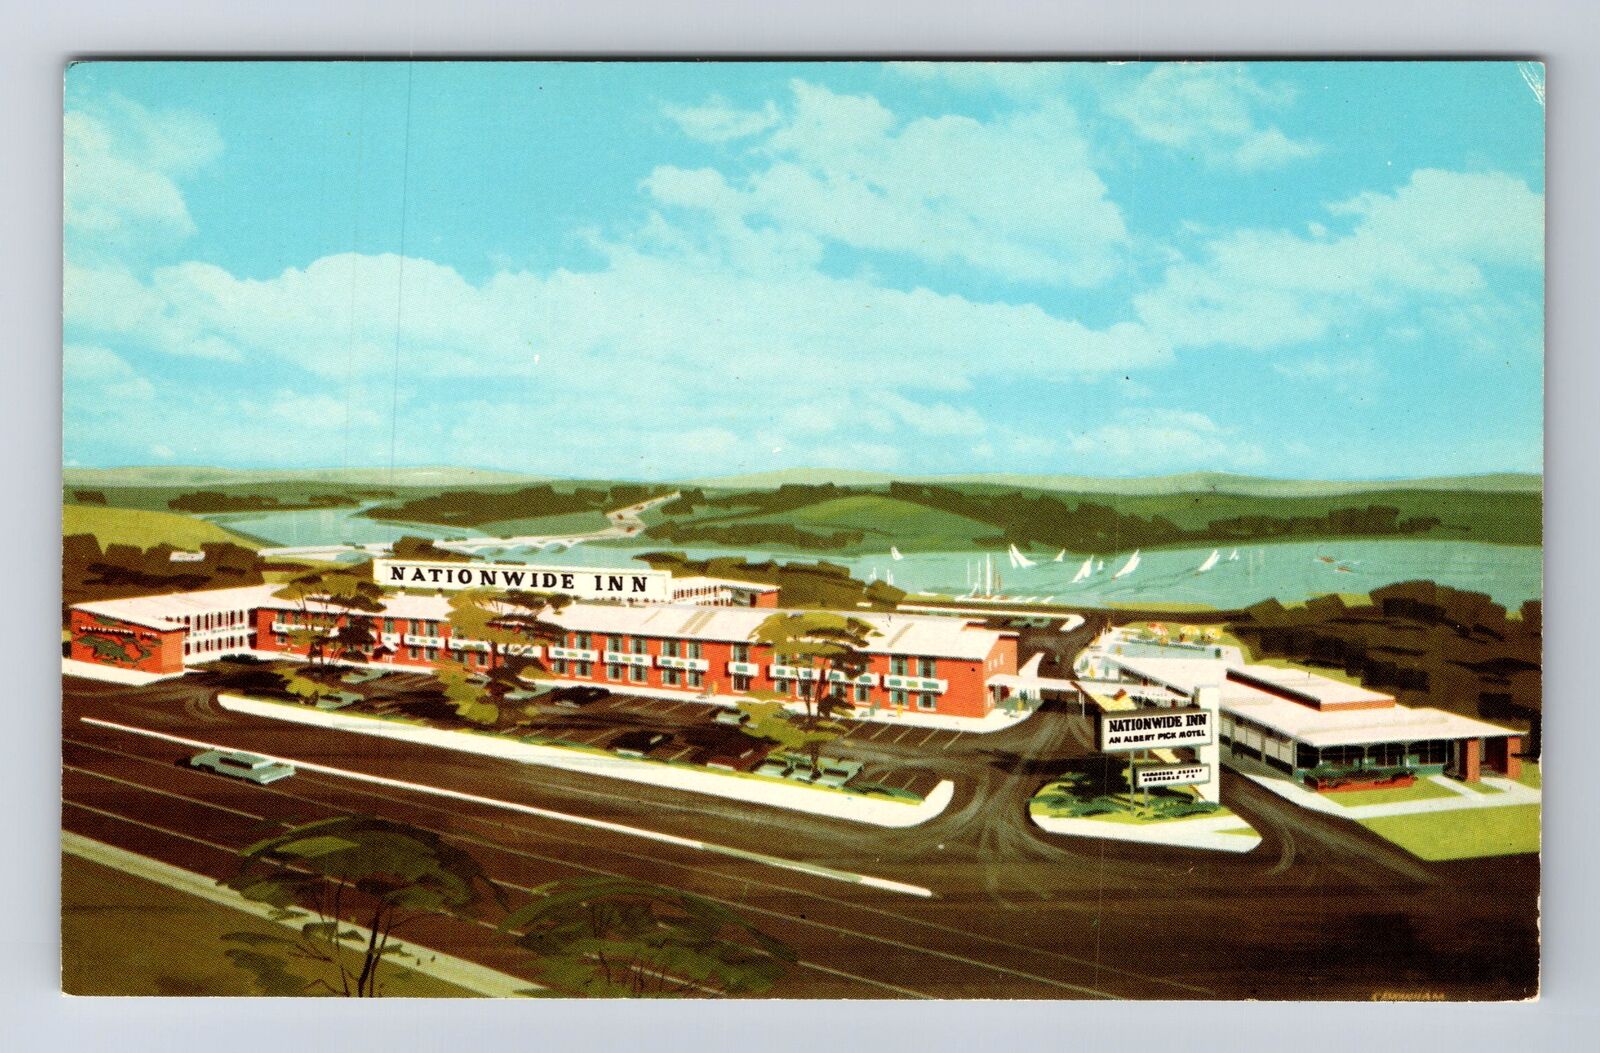 Harrisburg PA-Pennsylvania, Nationwide Inn, Advertisement, Vintage Postcard